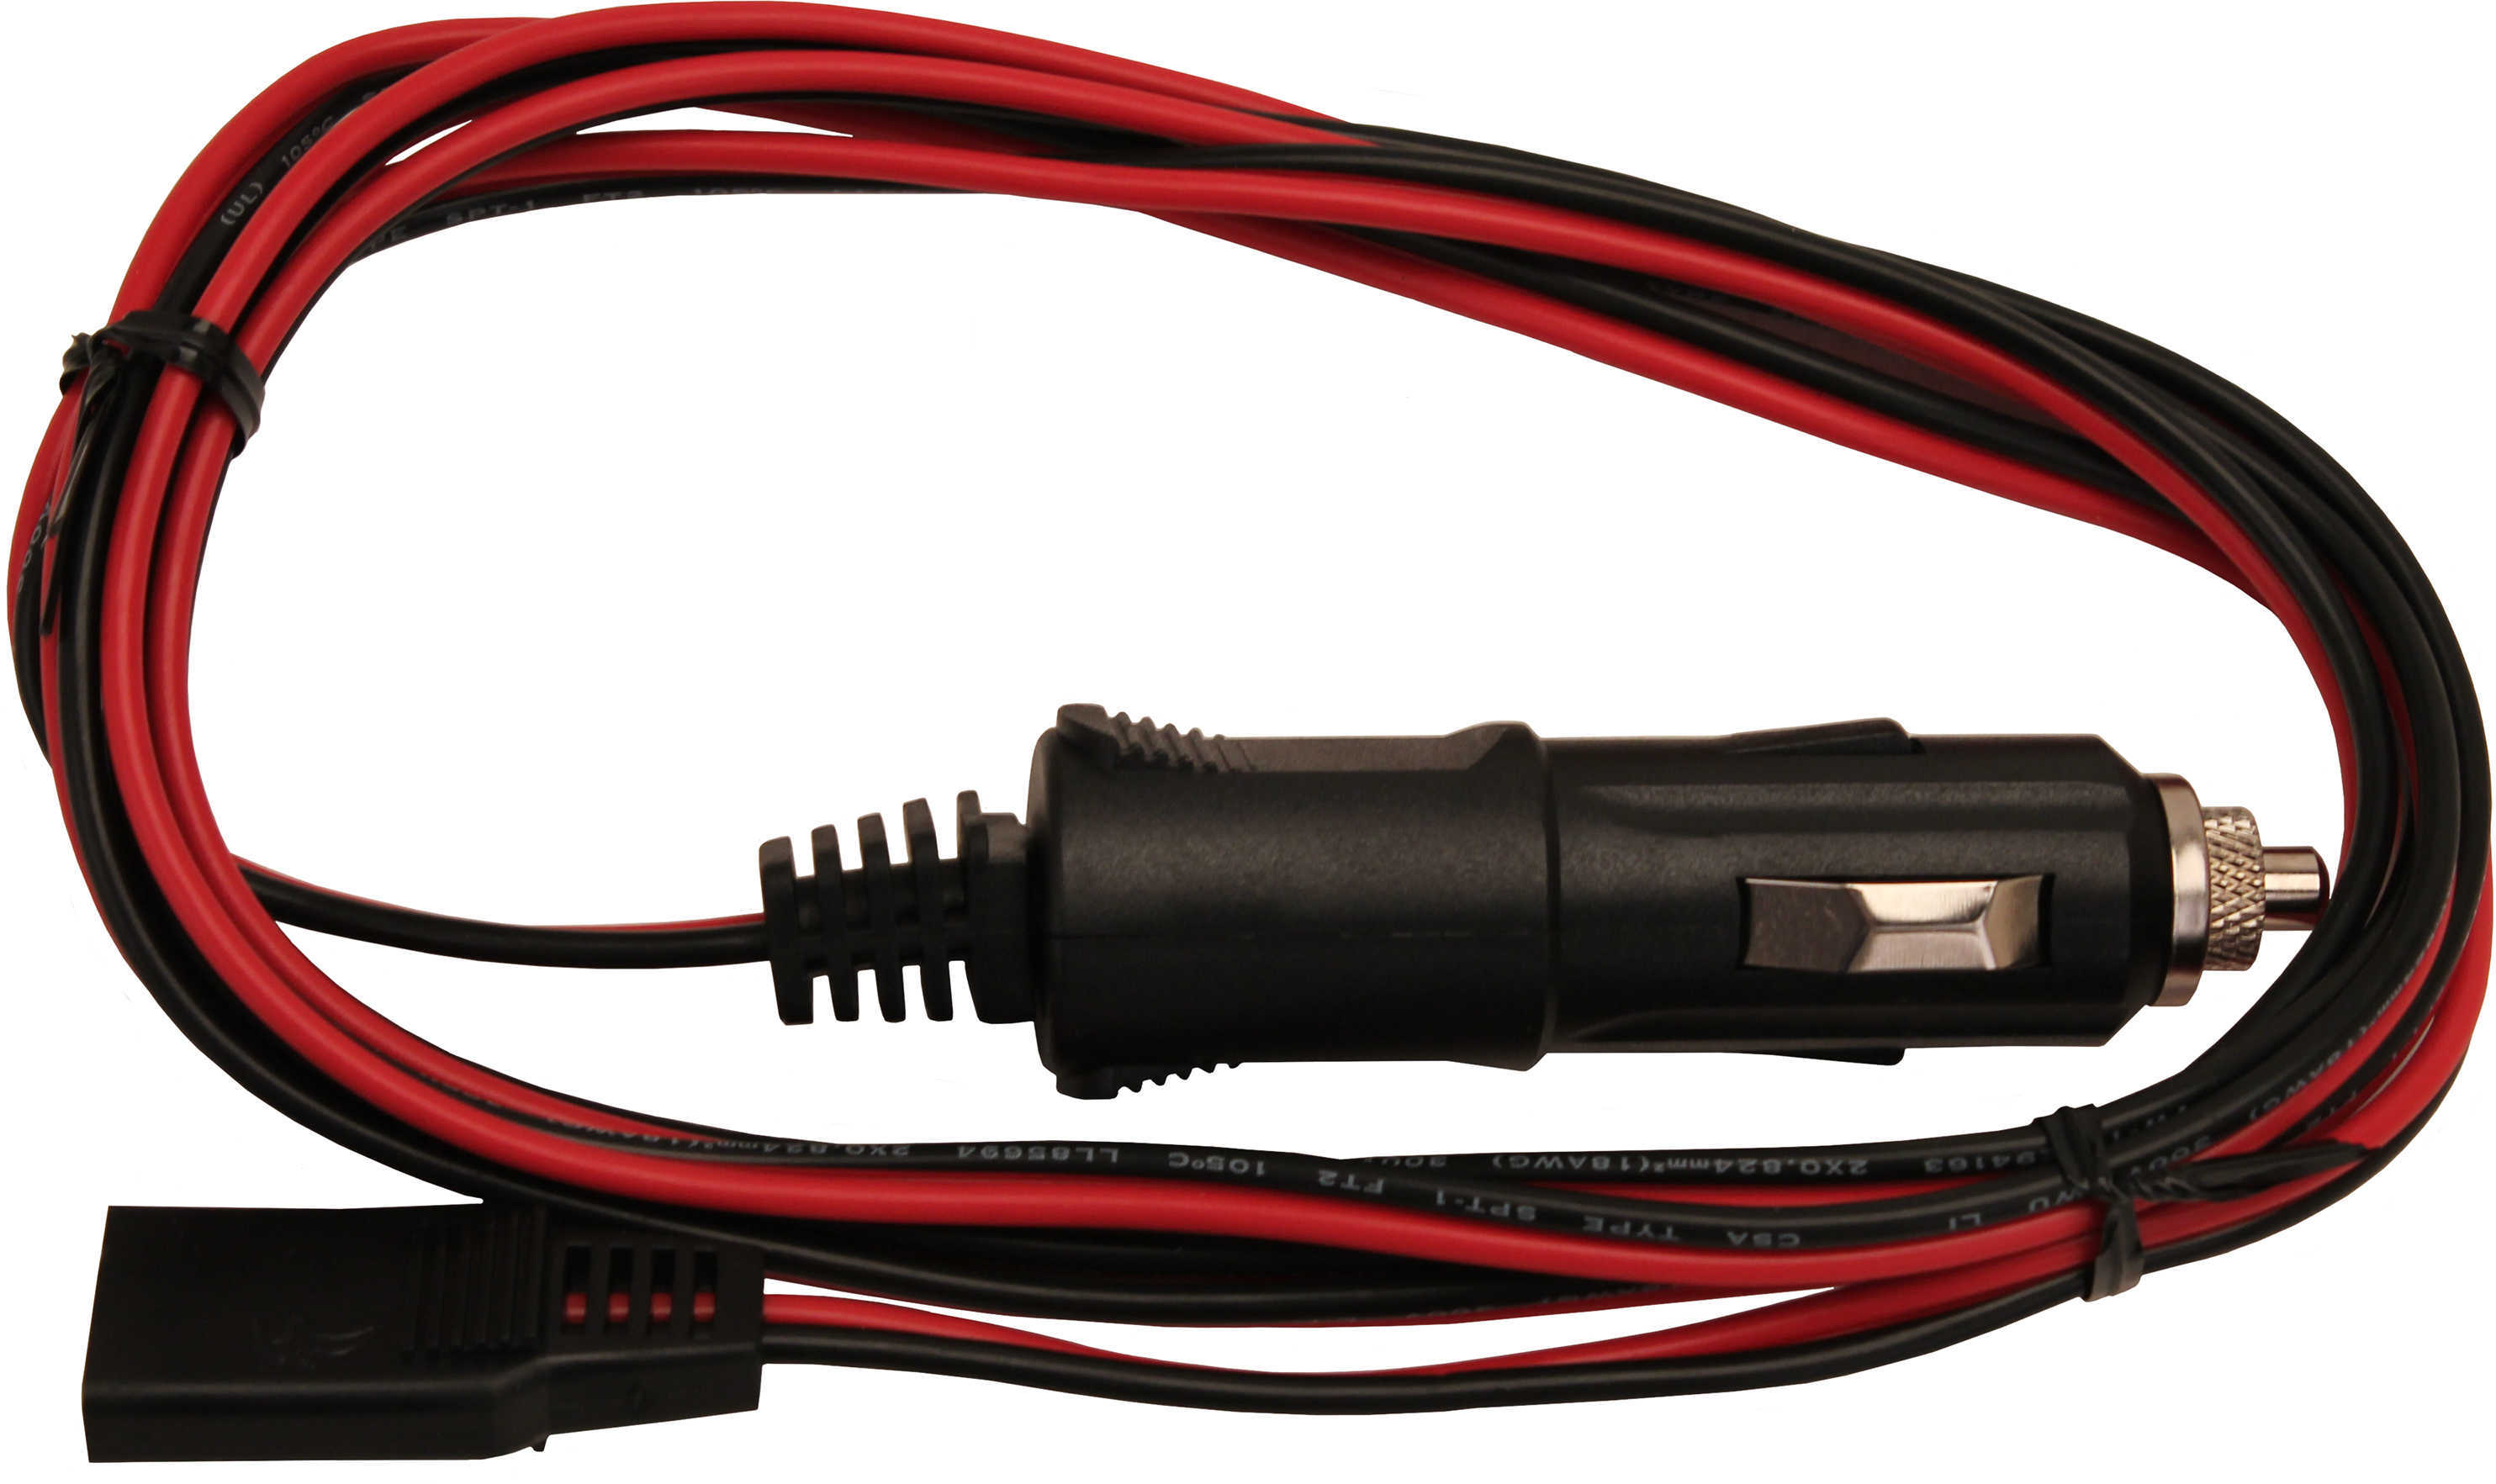 Vexilar Inc. 12v DC Power Cord Adapter for FL-8 &FL-18 PCDCA1